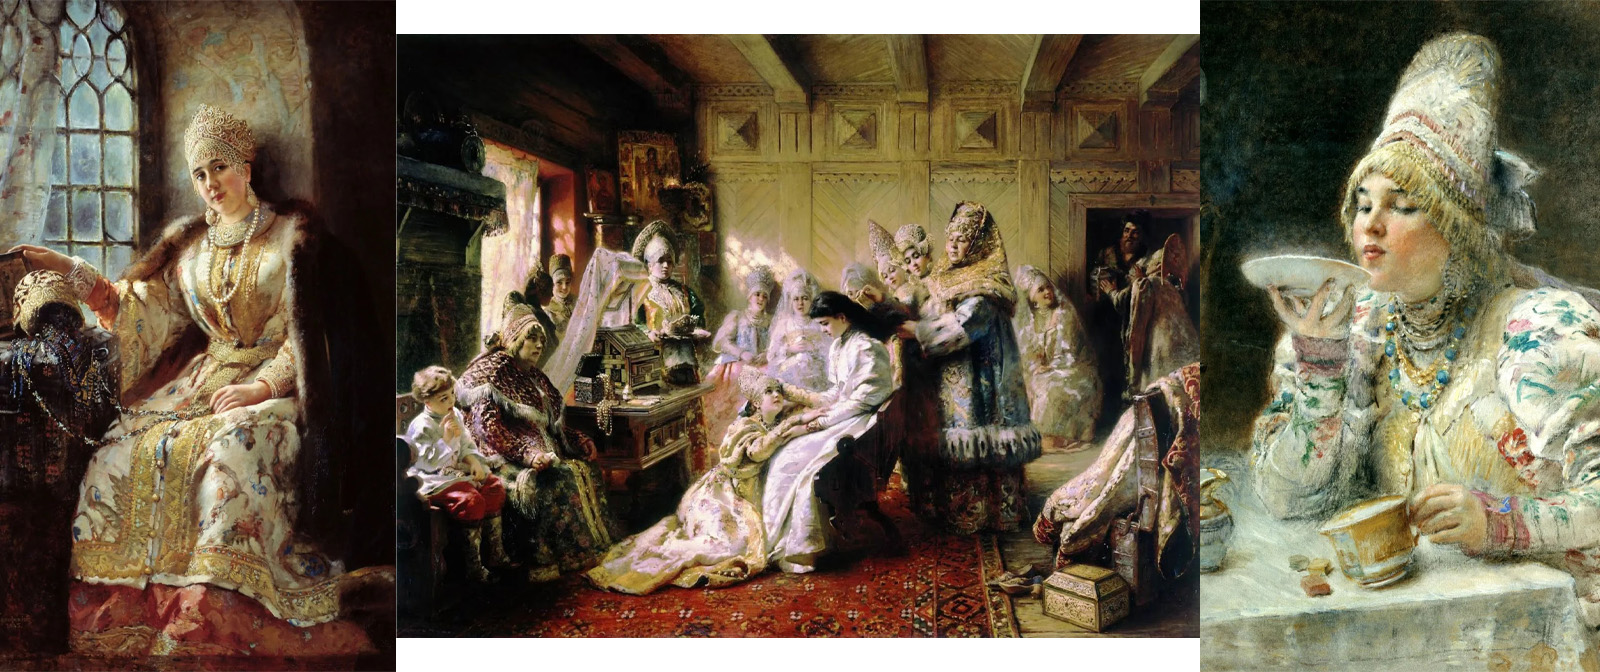 An immodest custom that Konstantin Makovsky depicted in his painting "Boyar Wedding Feast in the XVII century"